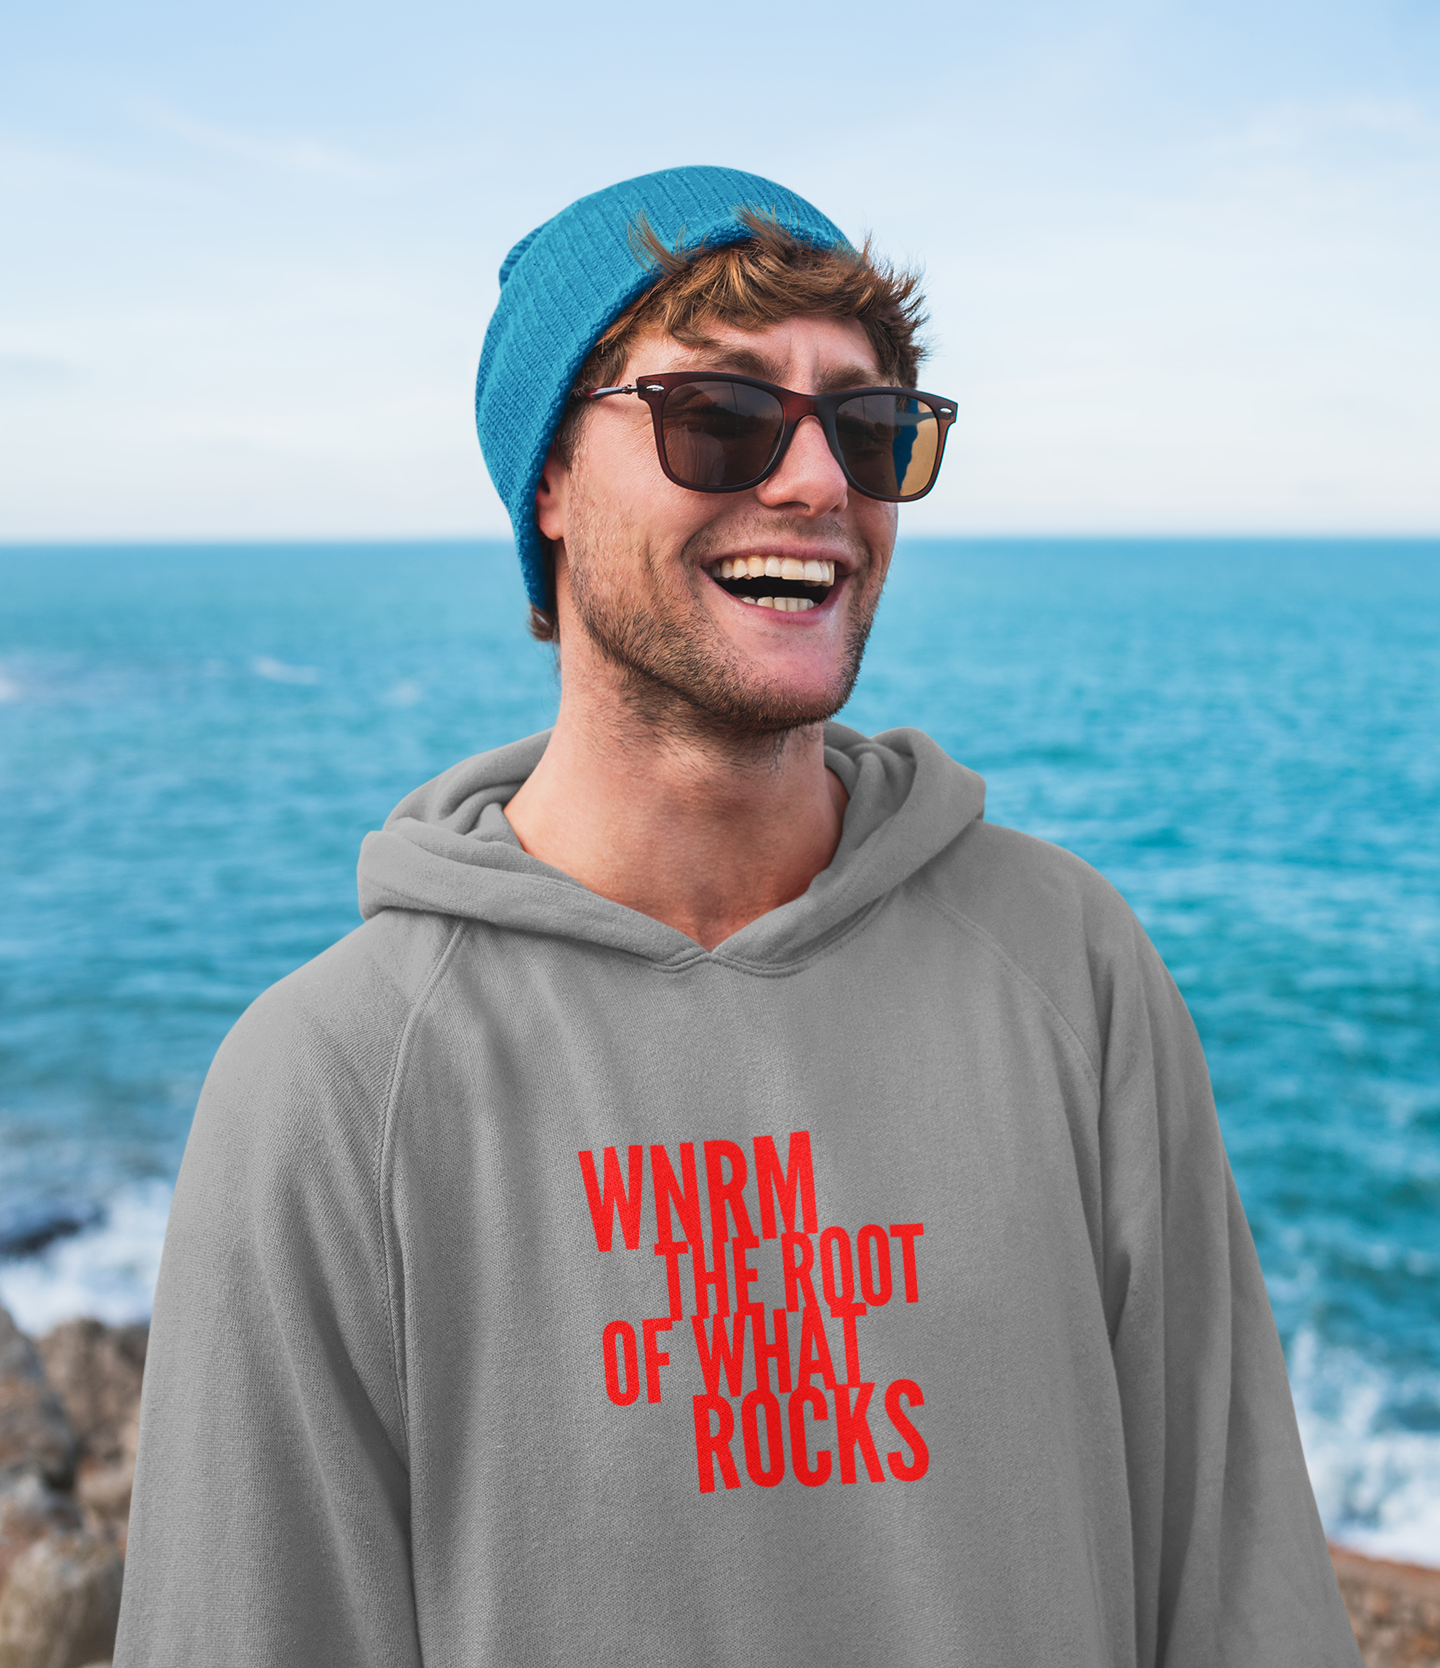 Surfer dude OG WNRM Logo Sweatshirt with a blue hat on the beach